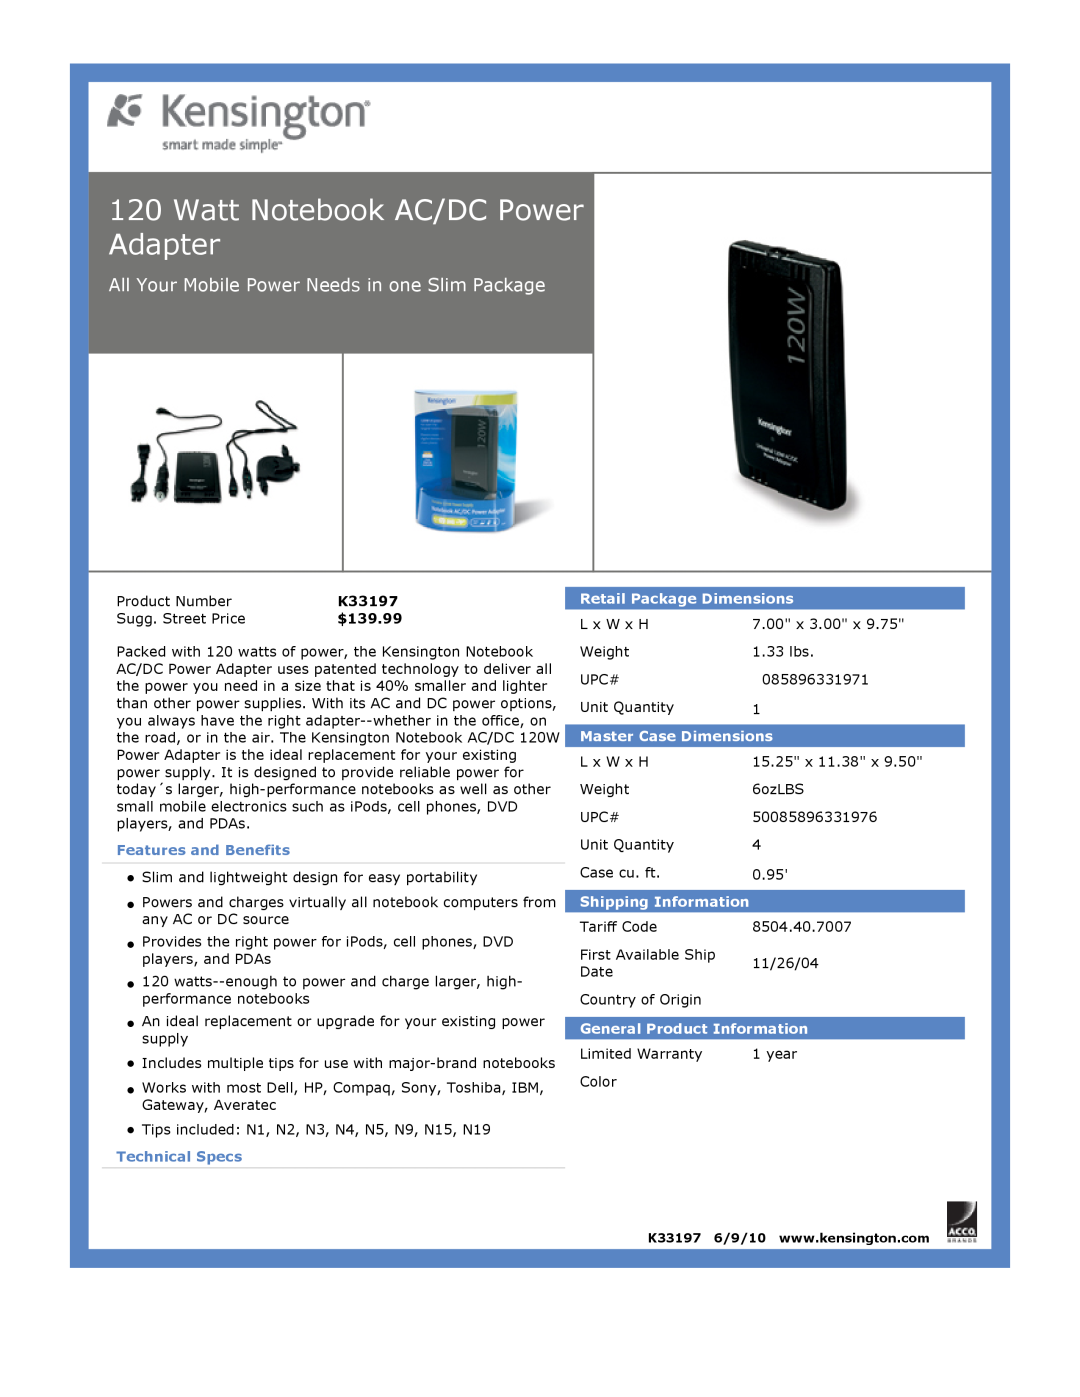 Kensington EU64325 dimensions Watt Notebook AC/DC Power Adapter, All Your Mobile Power Needs in one Slim Package, K33197 